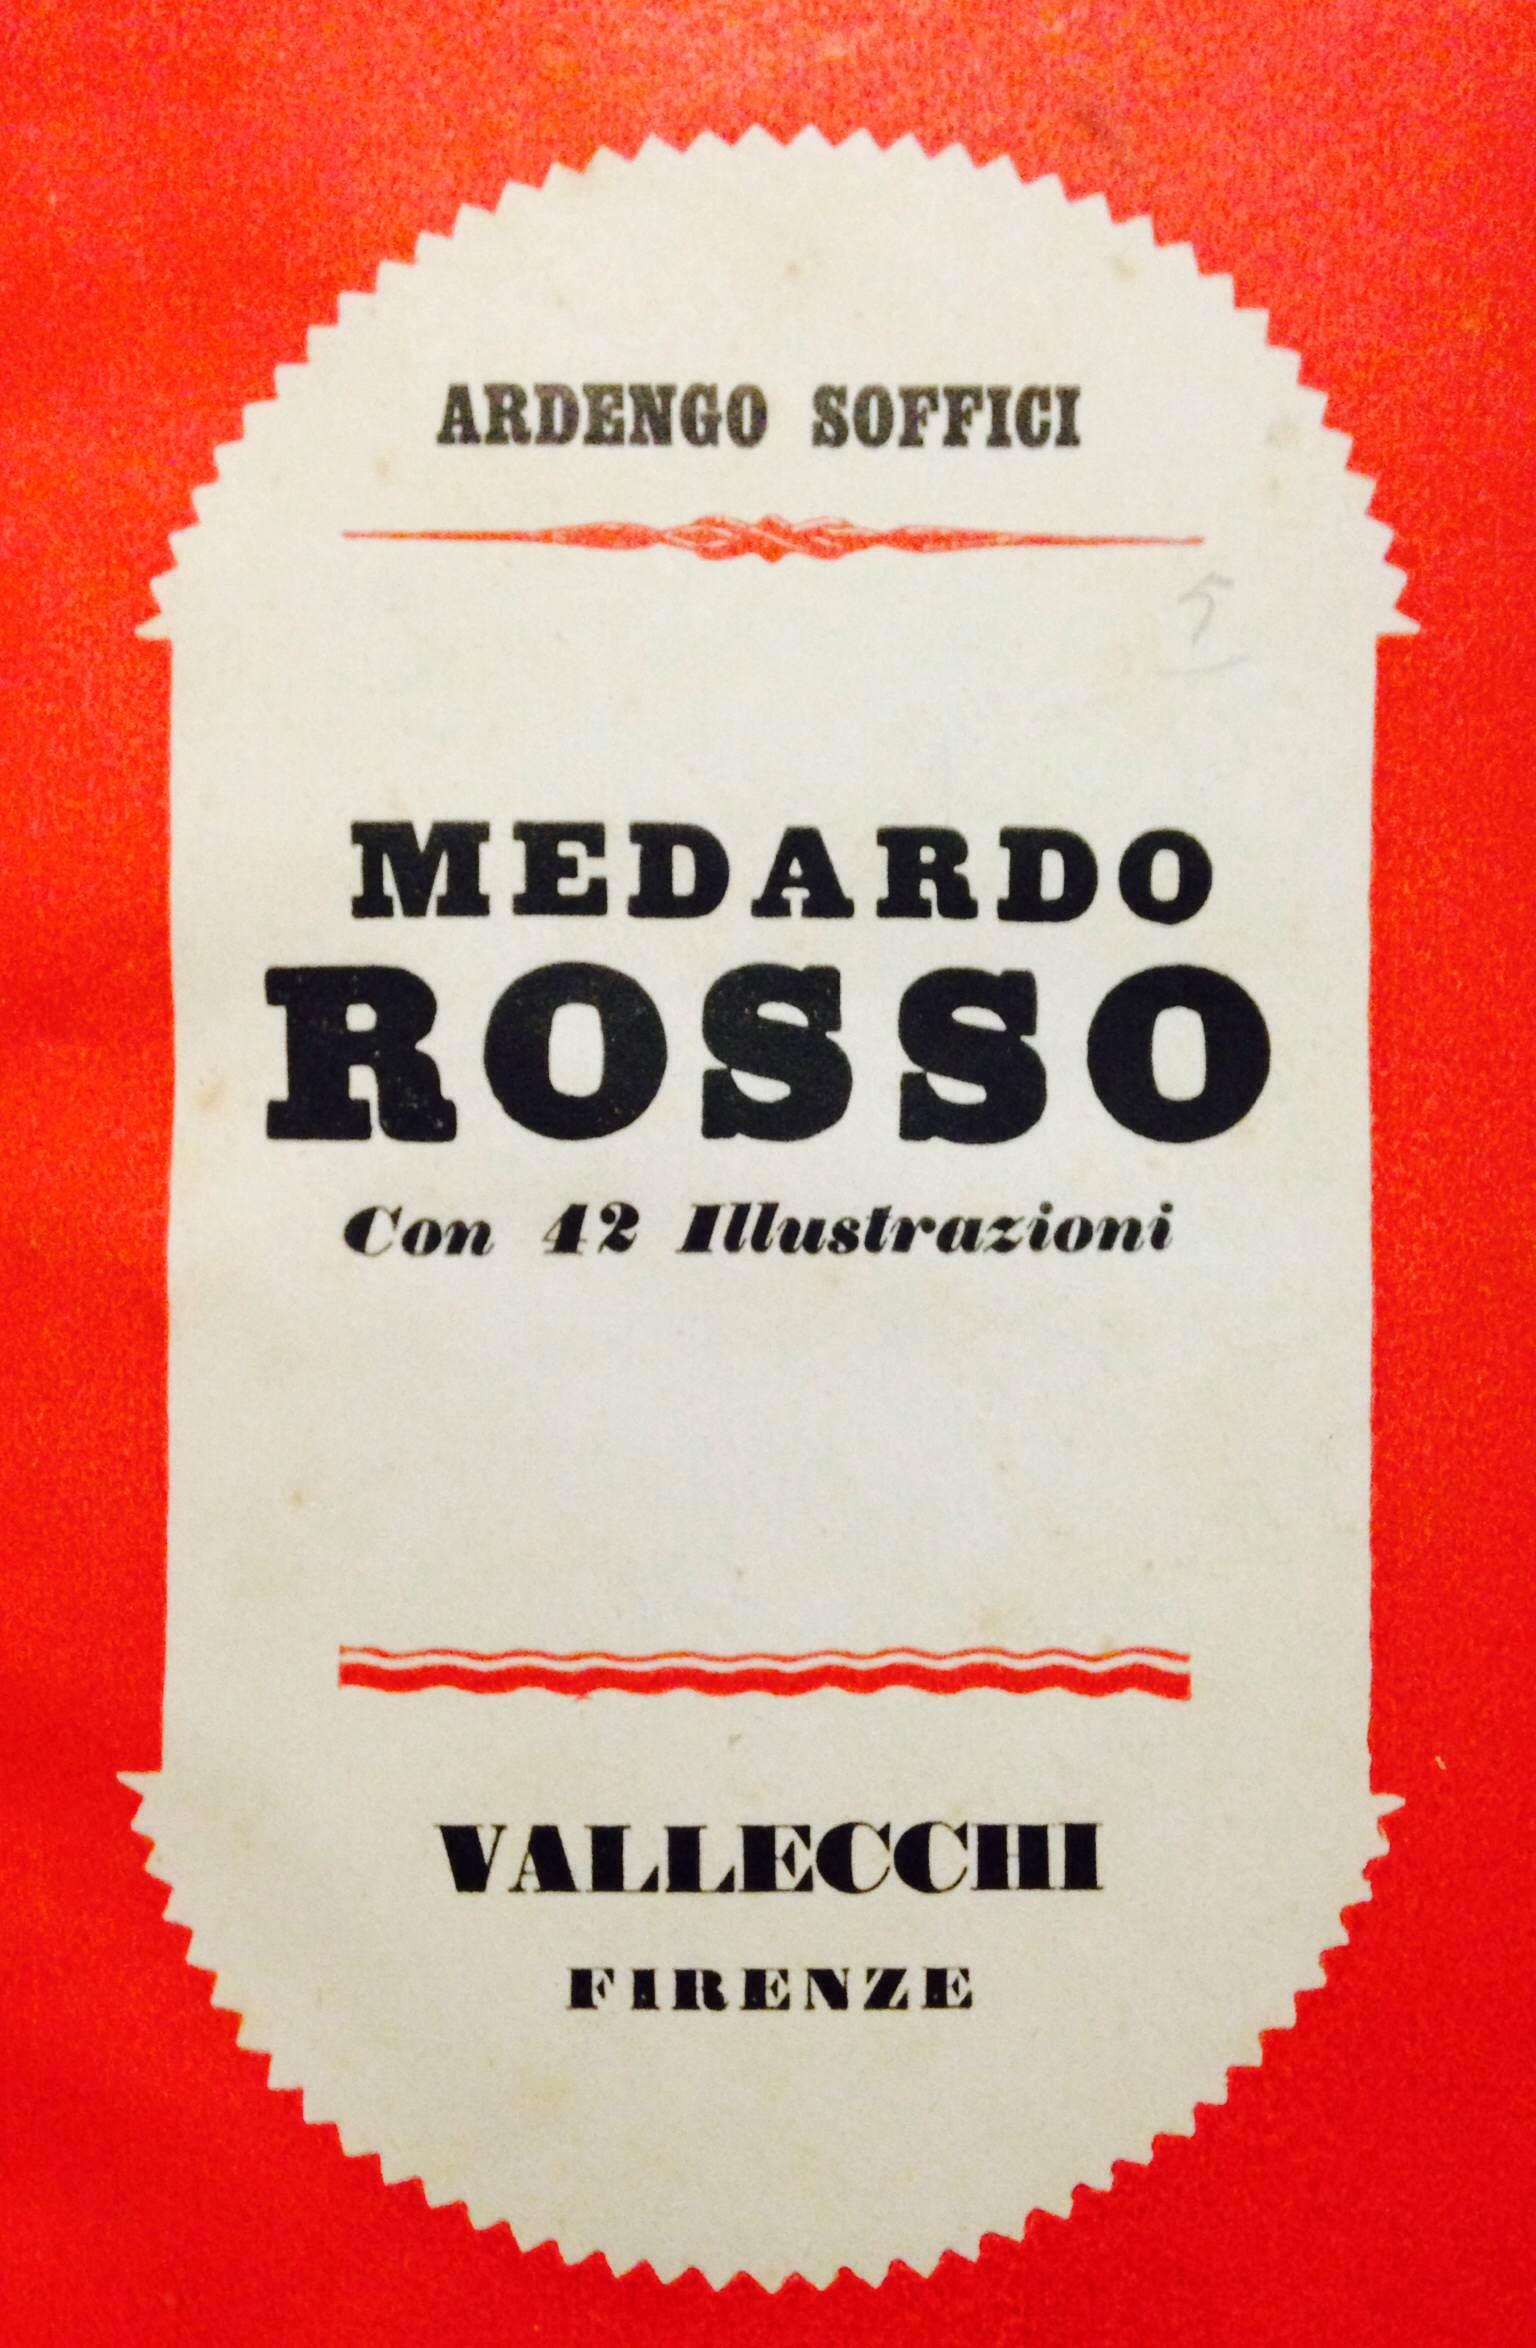 Medardo Rosso - Rare Book Illustrated by Ardengo Soffici - 1929